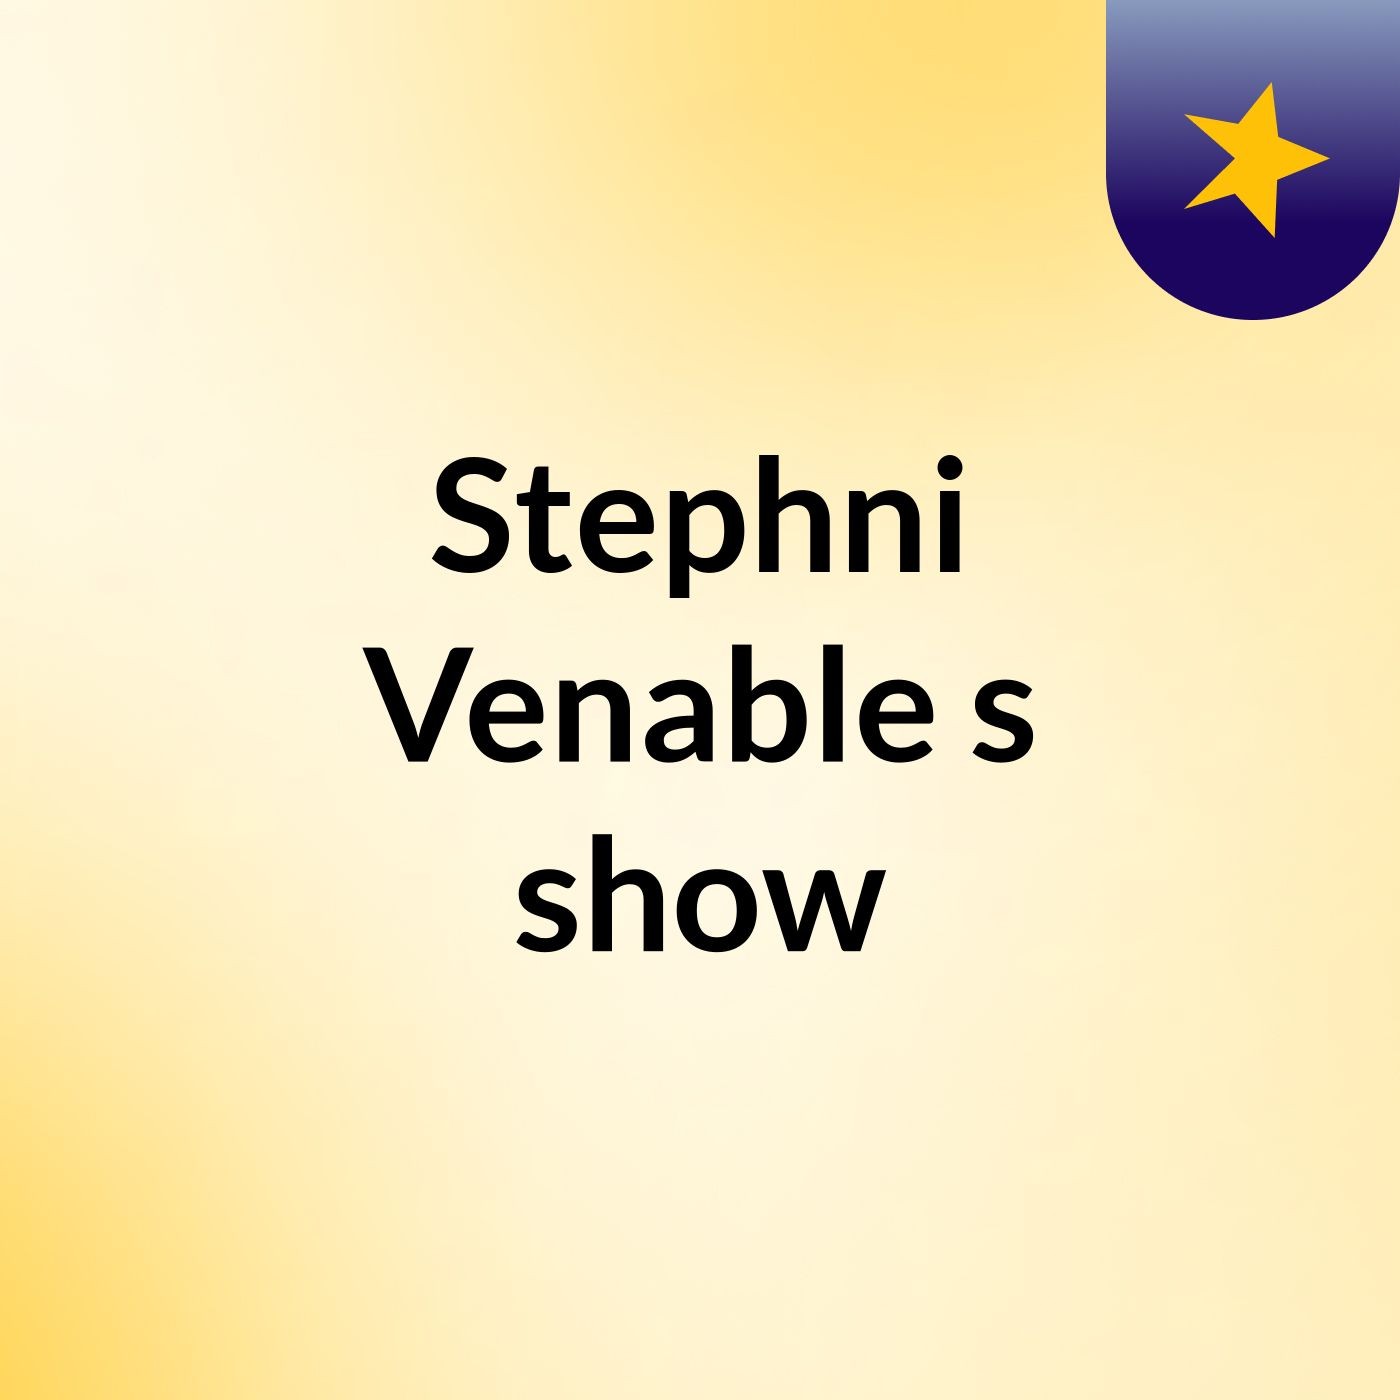 Episode 2 - Stephni Venable's show